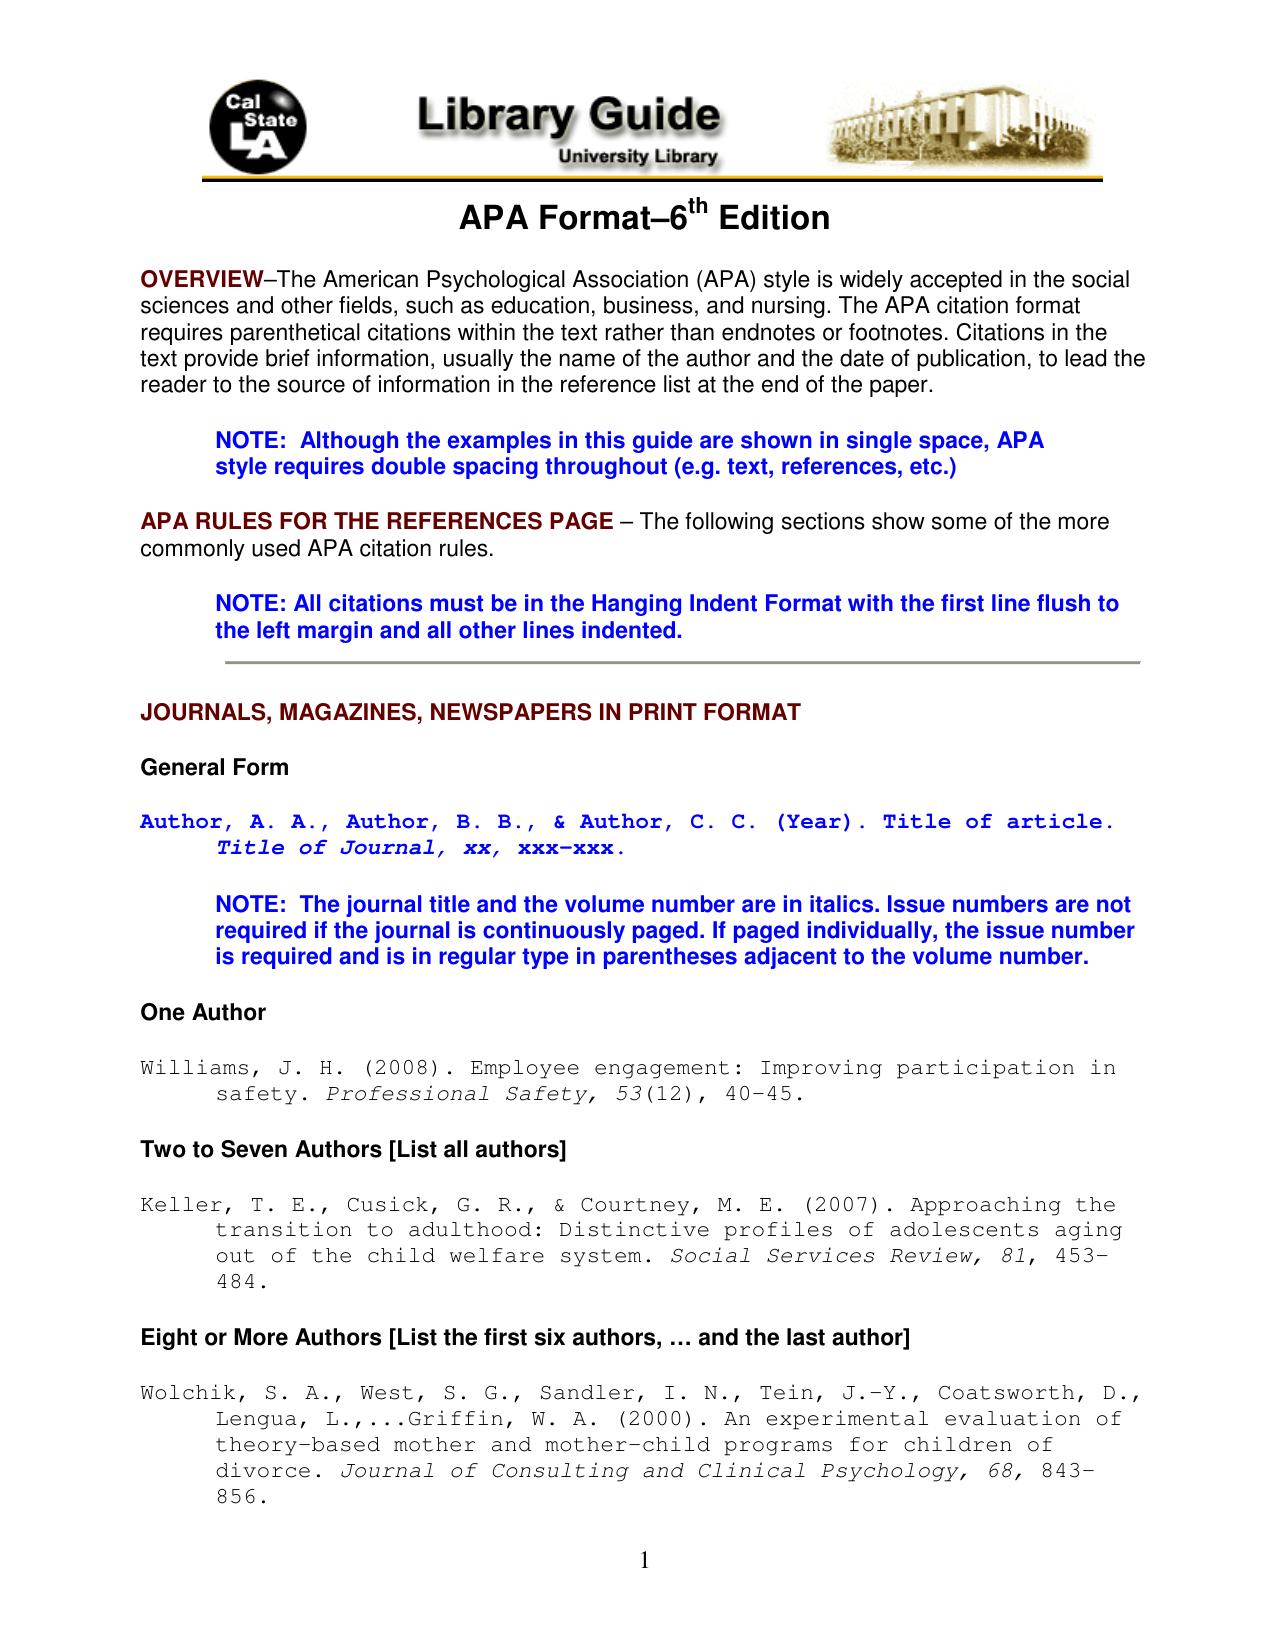 Microsoft Word - Newly Rev APA Handout 091409.doc